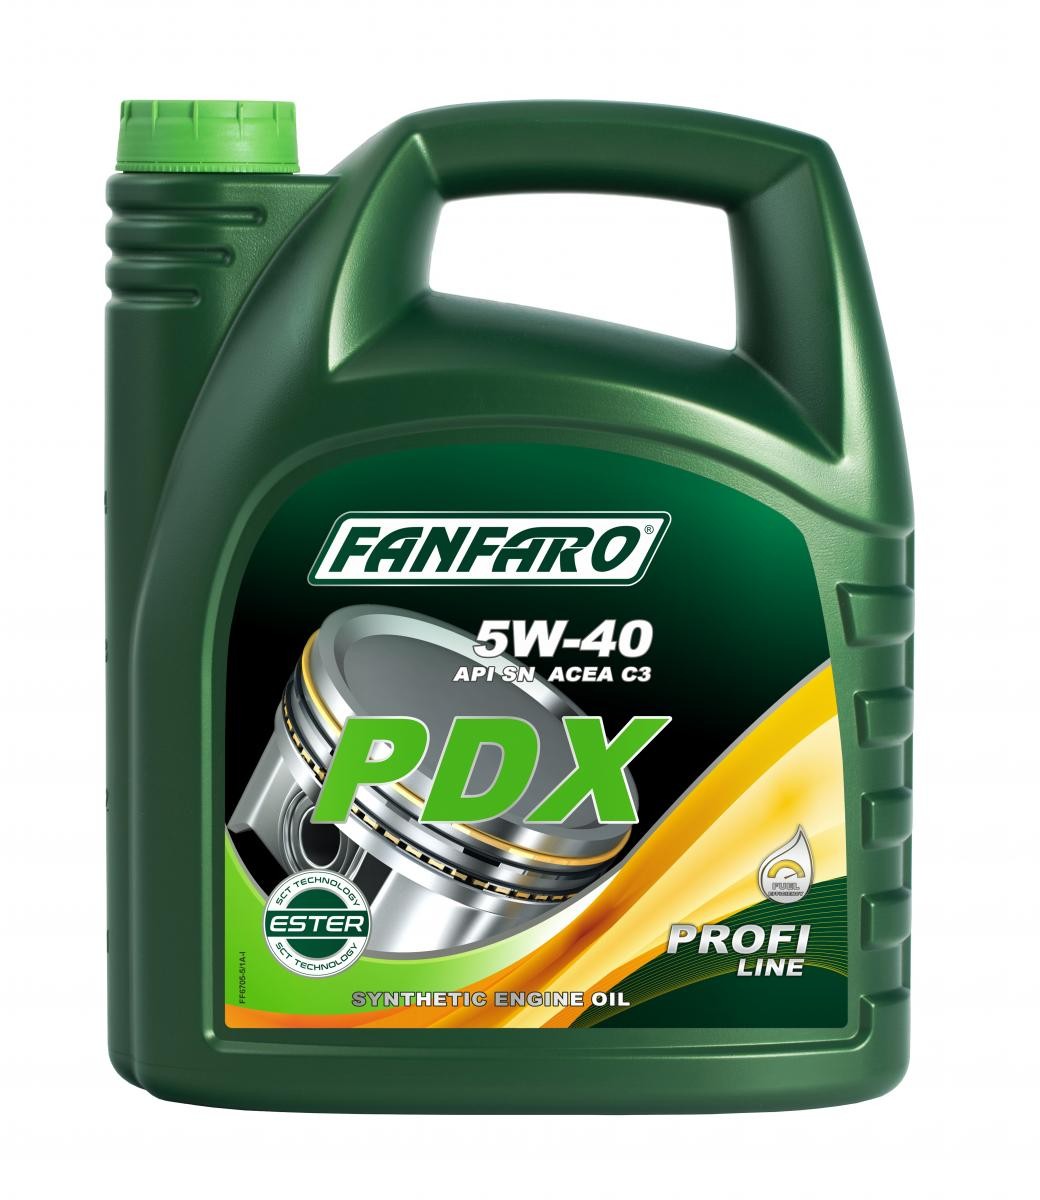 Auto oil FANFARO 5W-40, 5l, Synthetic Oil longlife FF6705-5